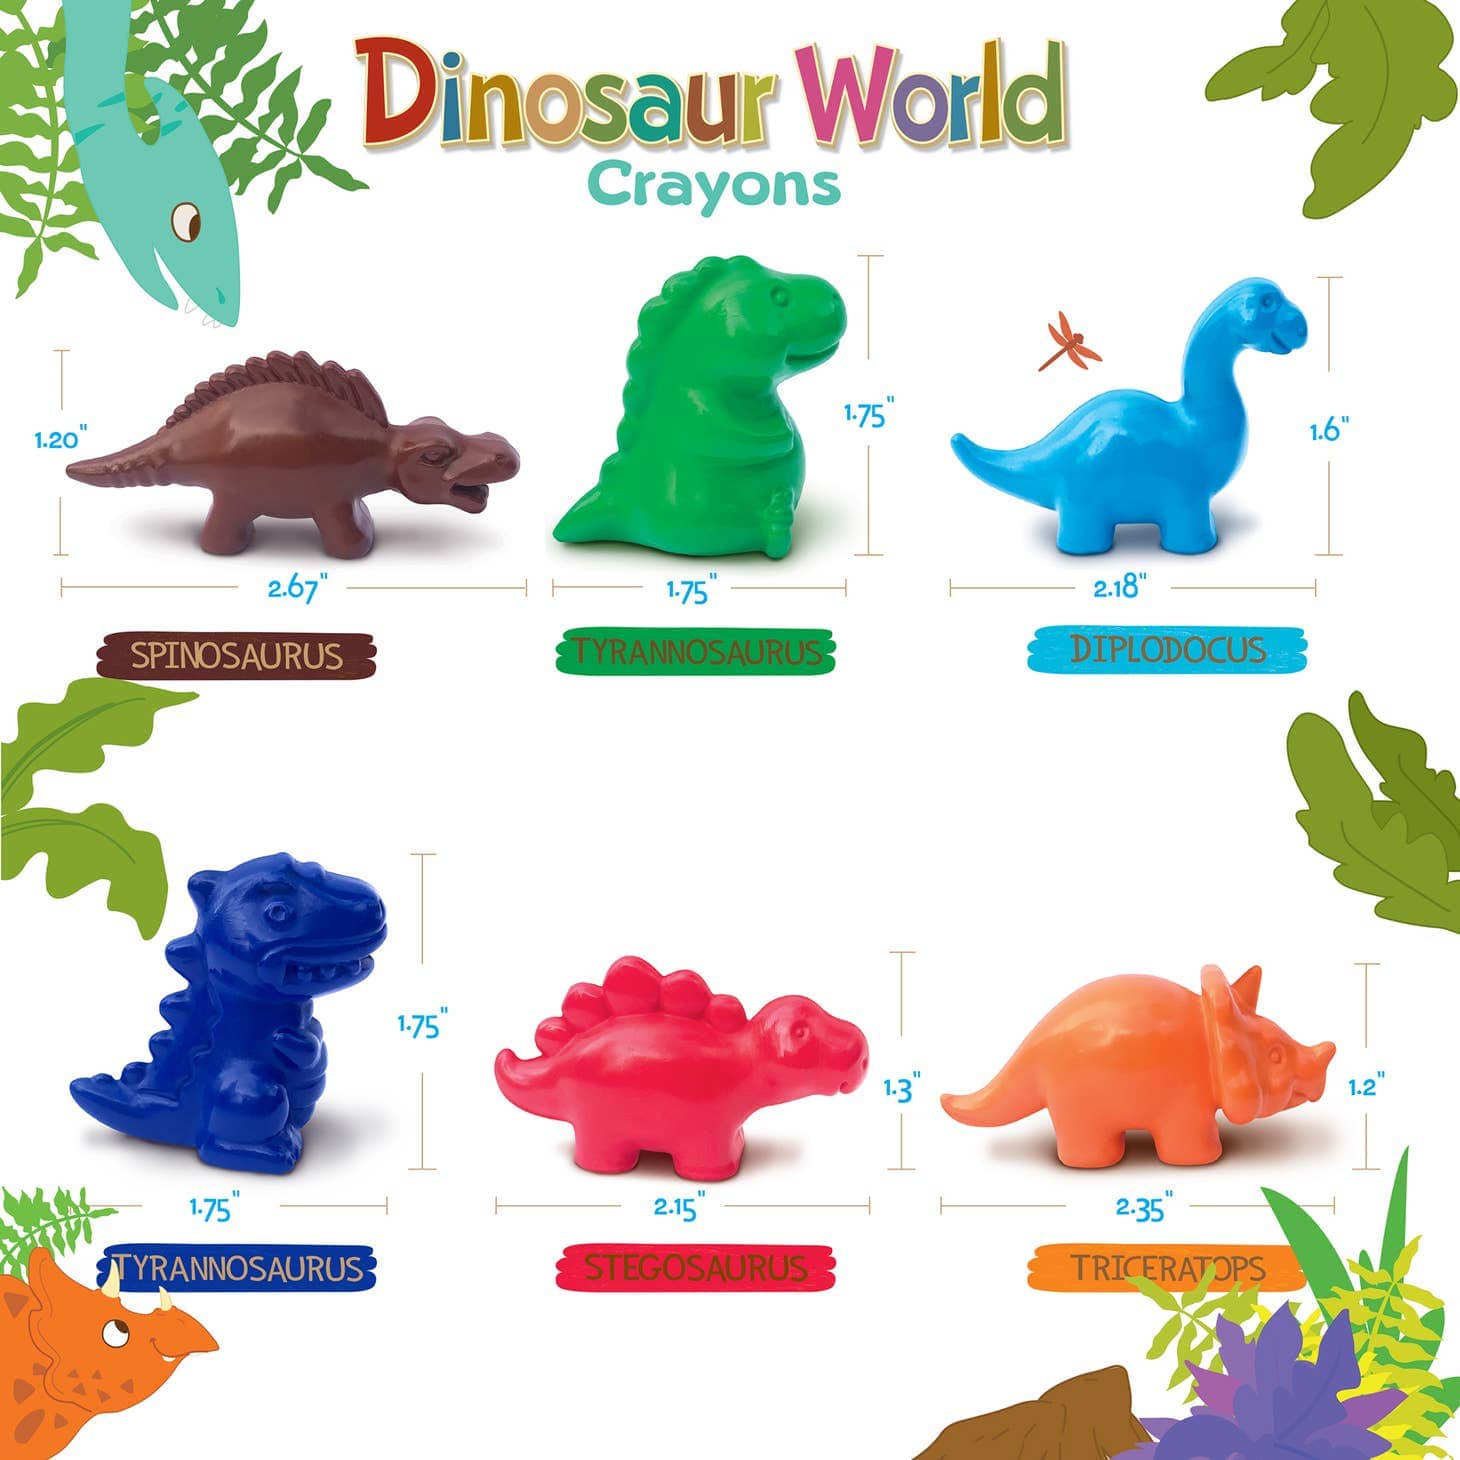 Dinosaur World Crayons of Fun - Twinkle Twinkle Little One